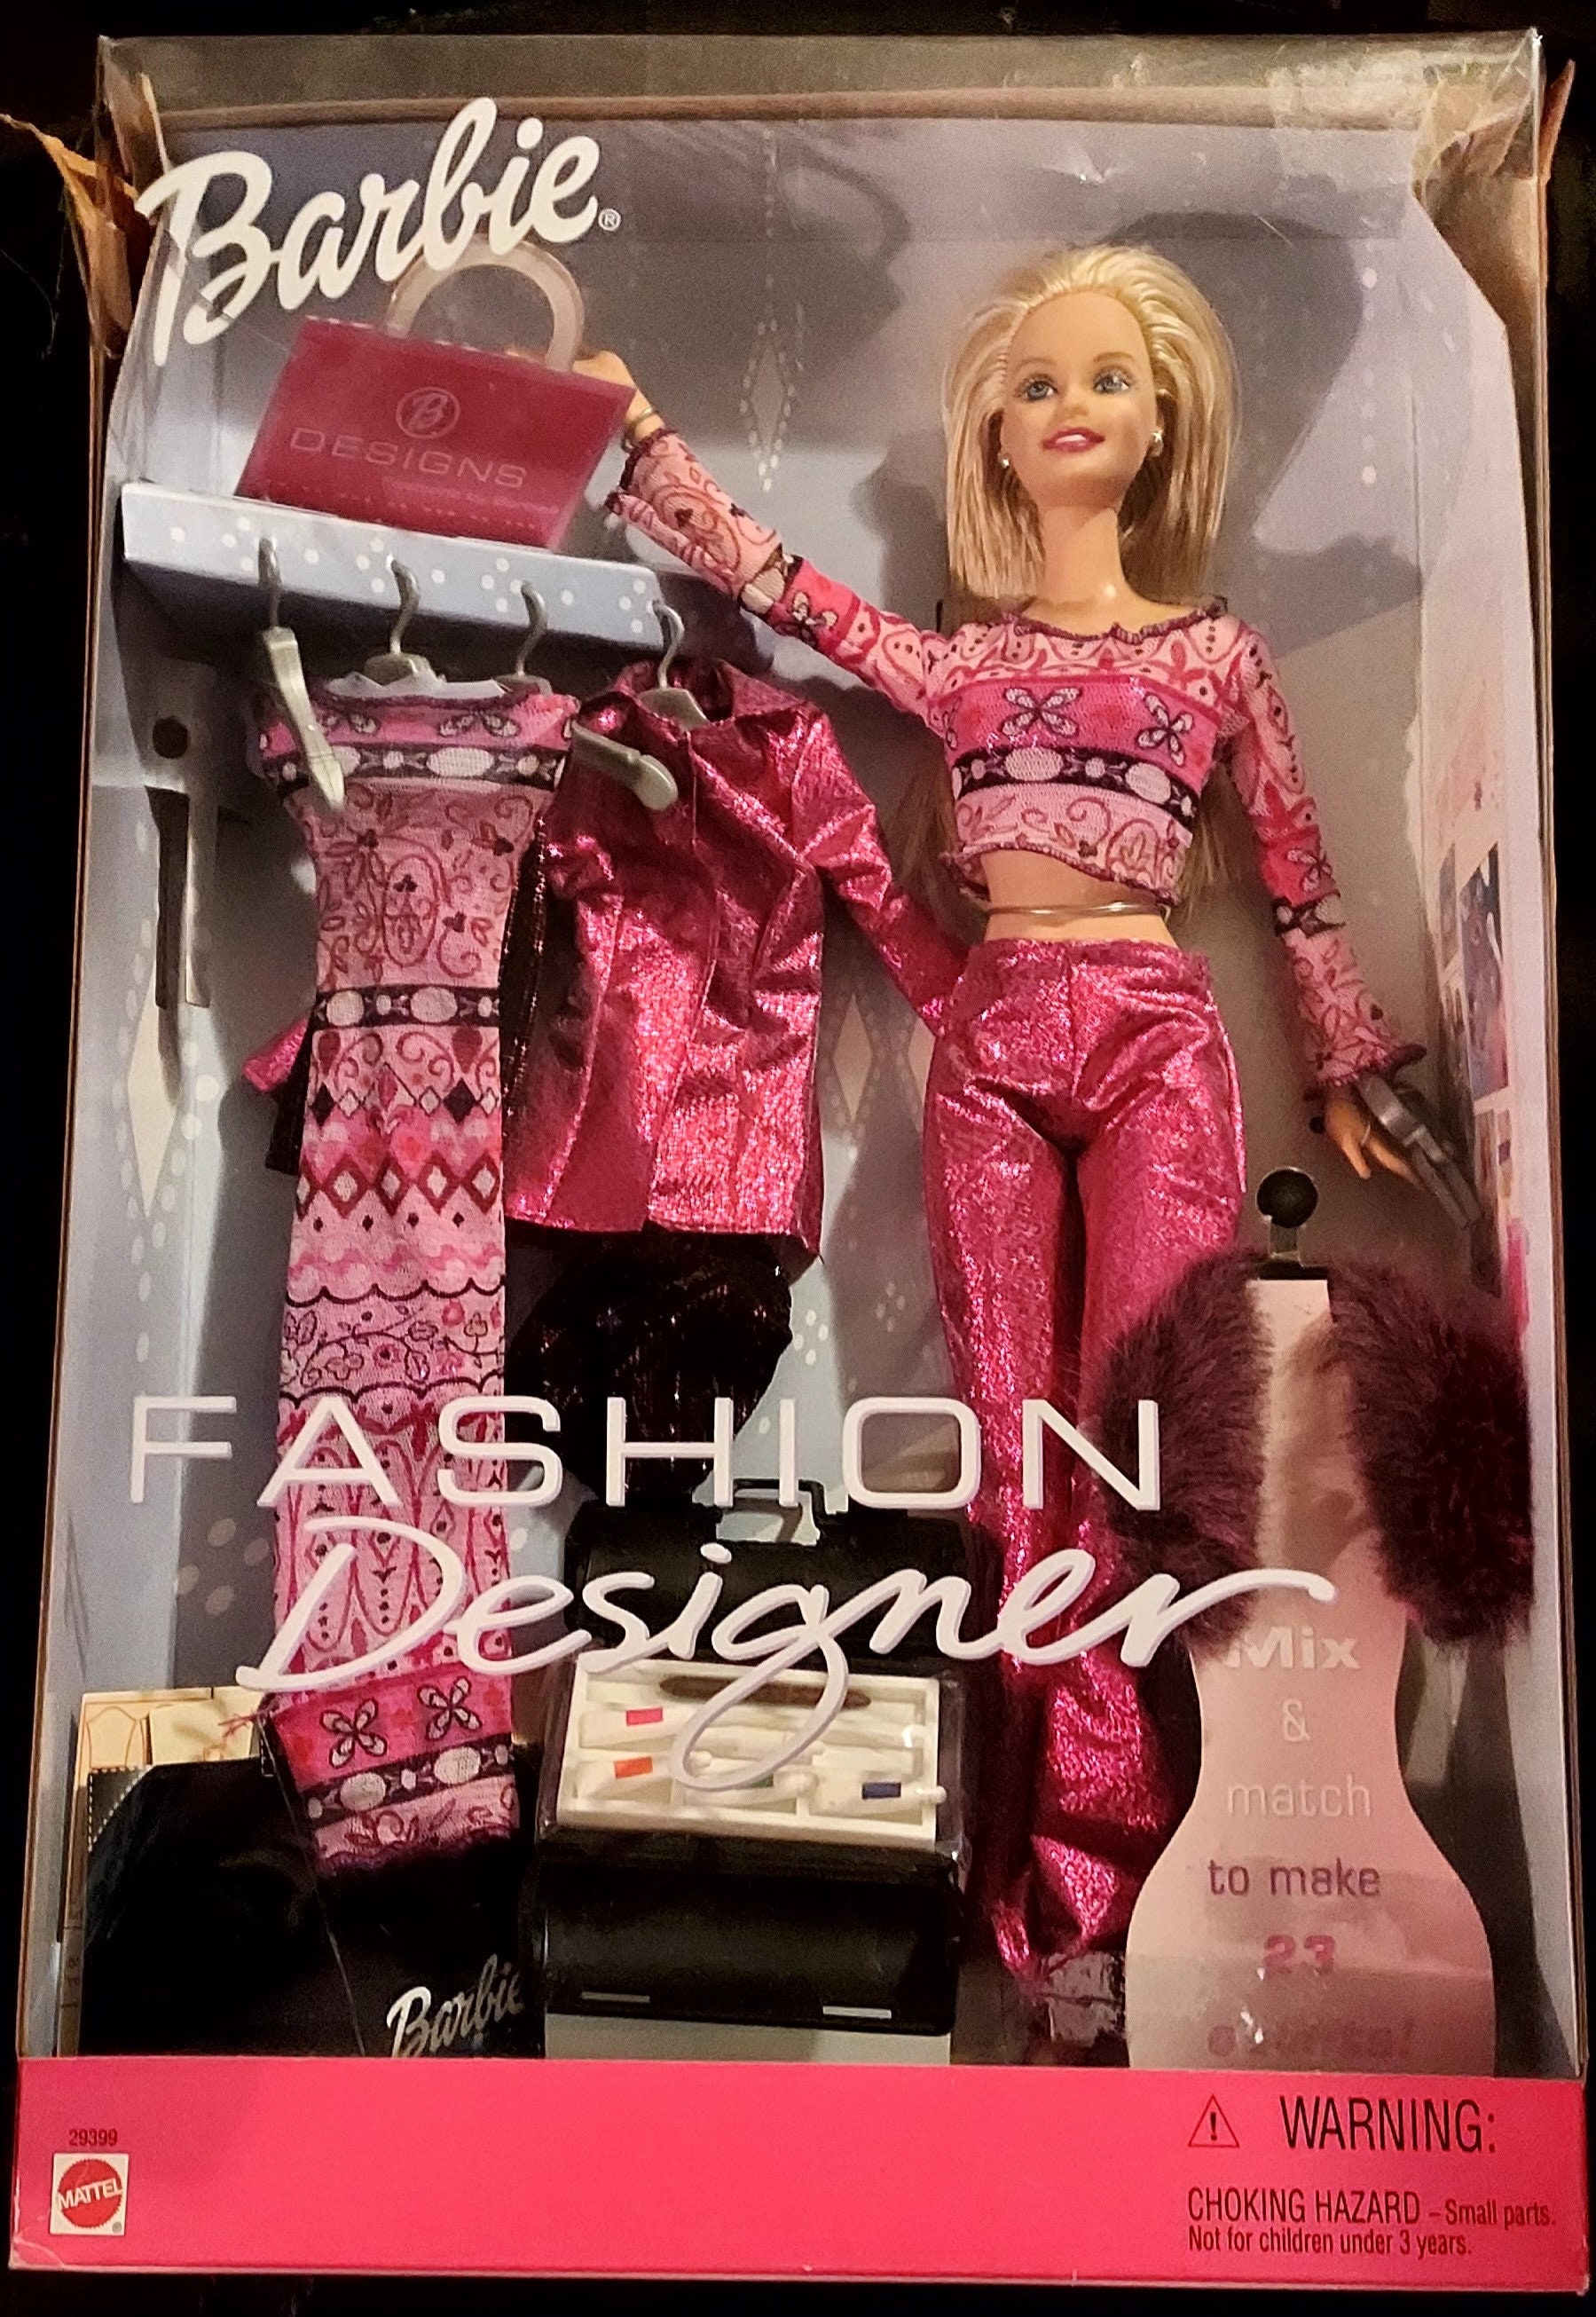 Barbie Fashion Designer - Wikipedia